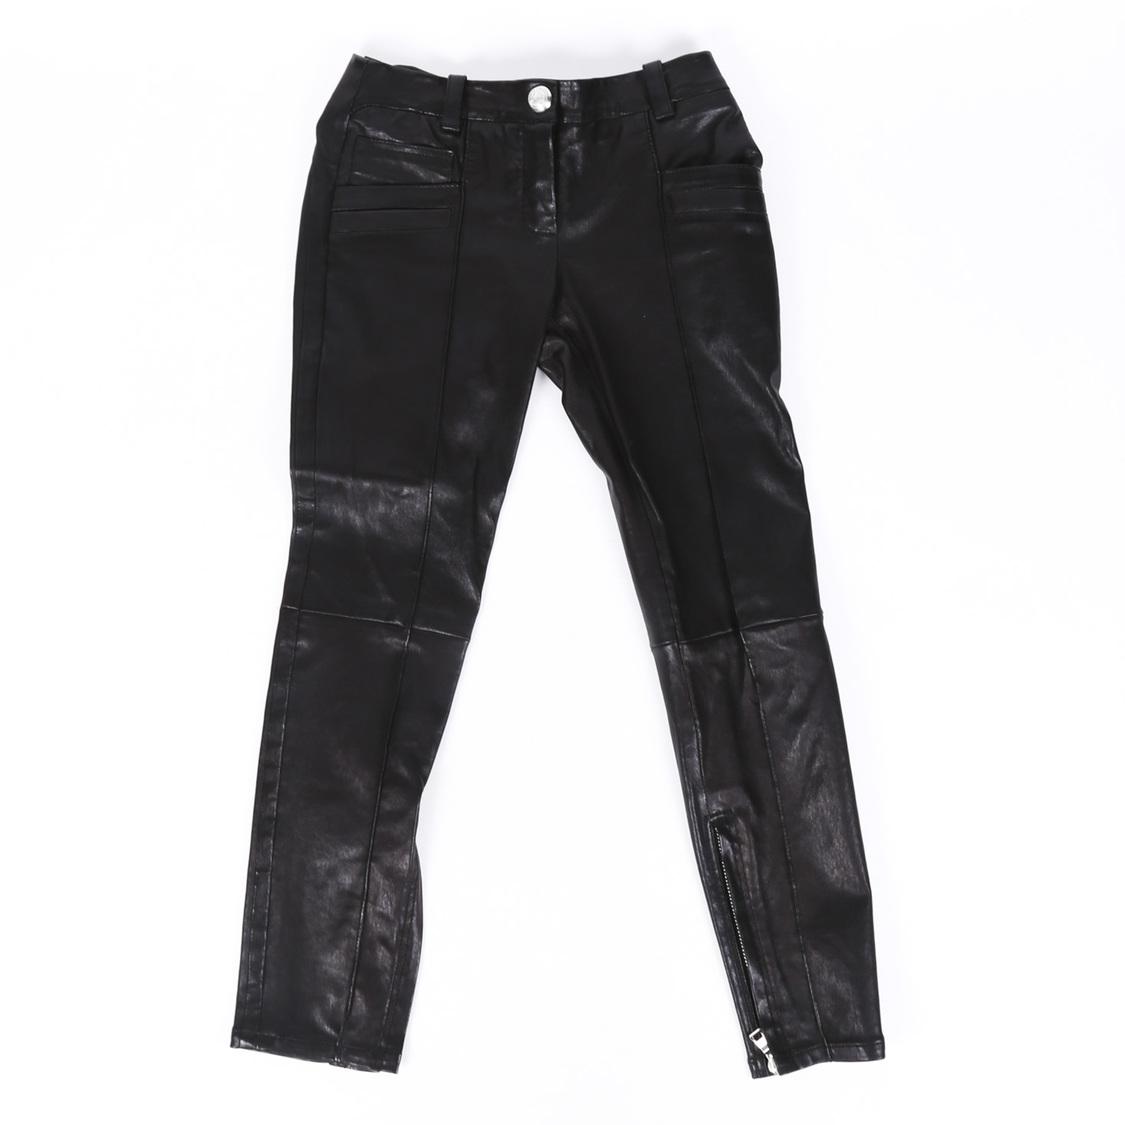 Balmain Leather Cropped Skinny Pants in Black - Lyst